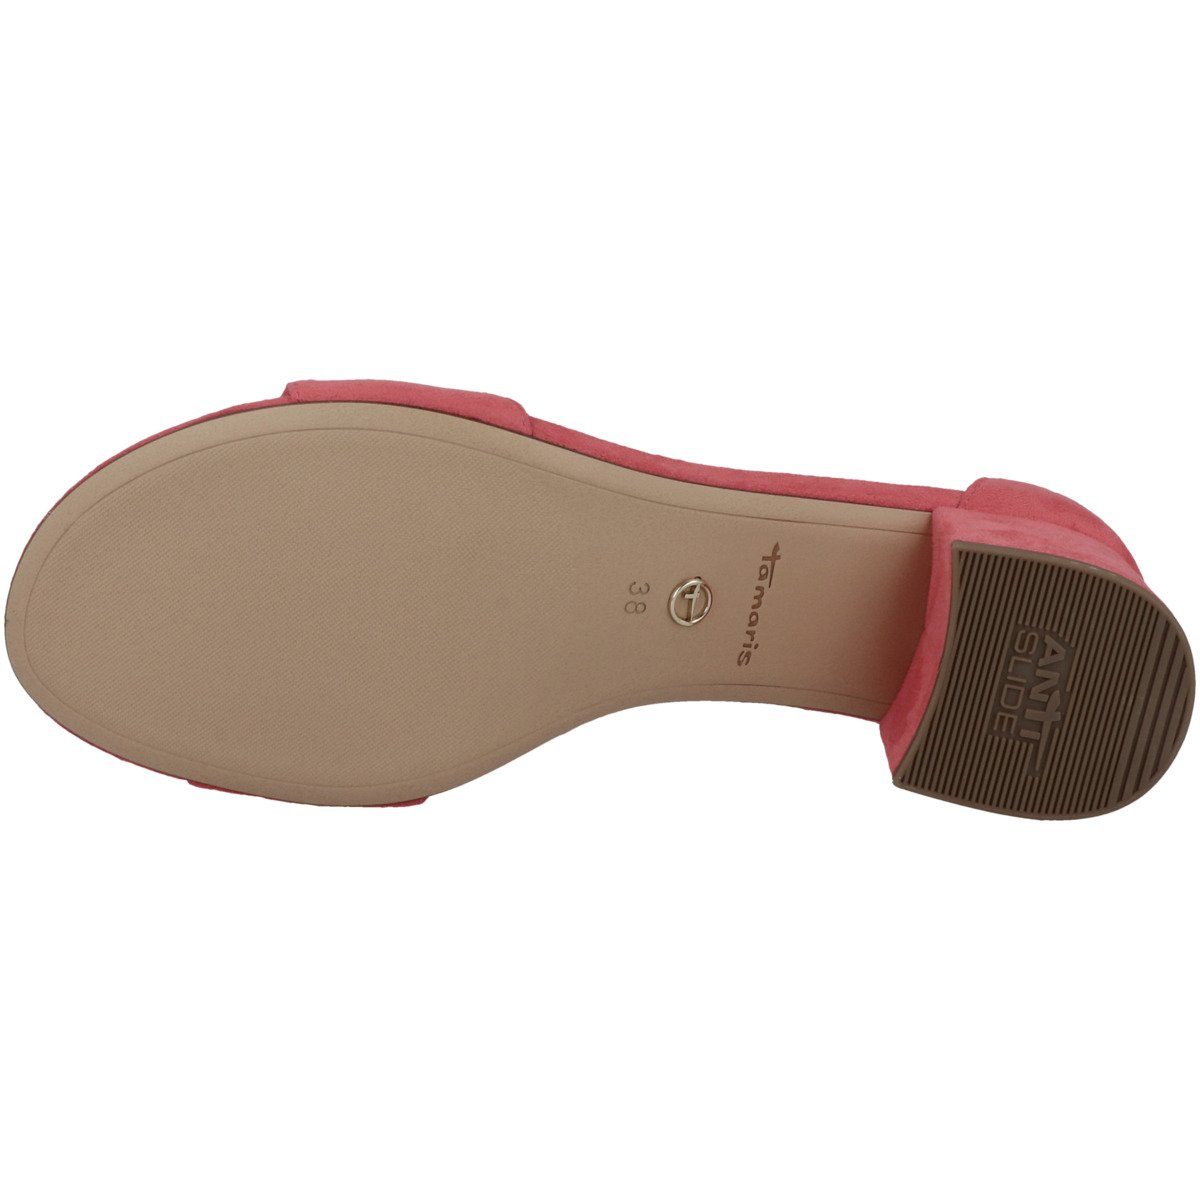 1-28201-20 Tamaris Sandalette besonderen Merkmale keine Damen pink